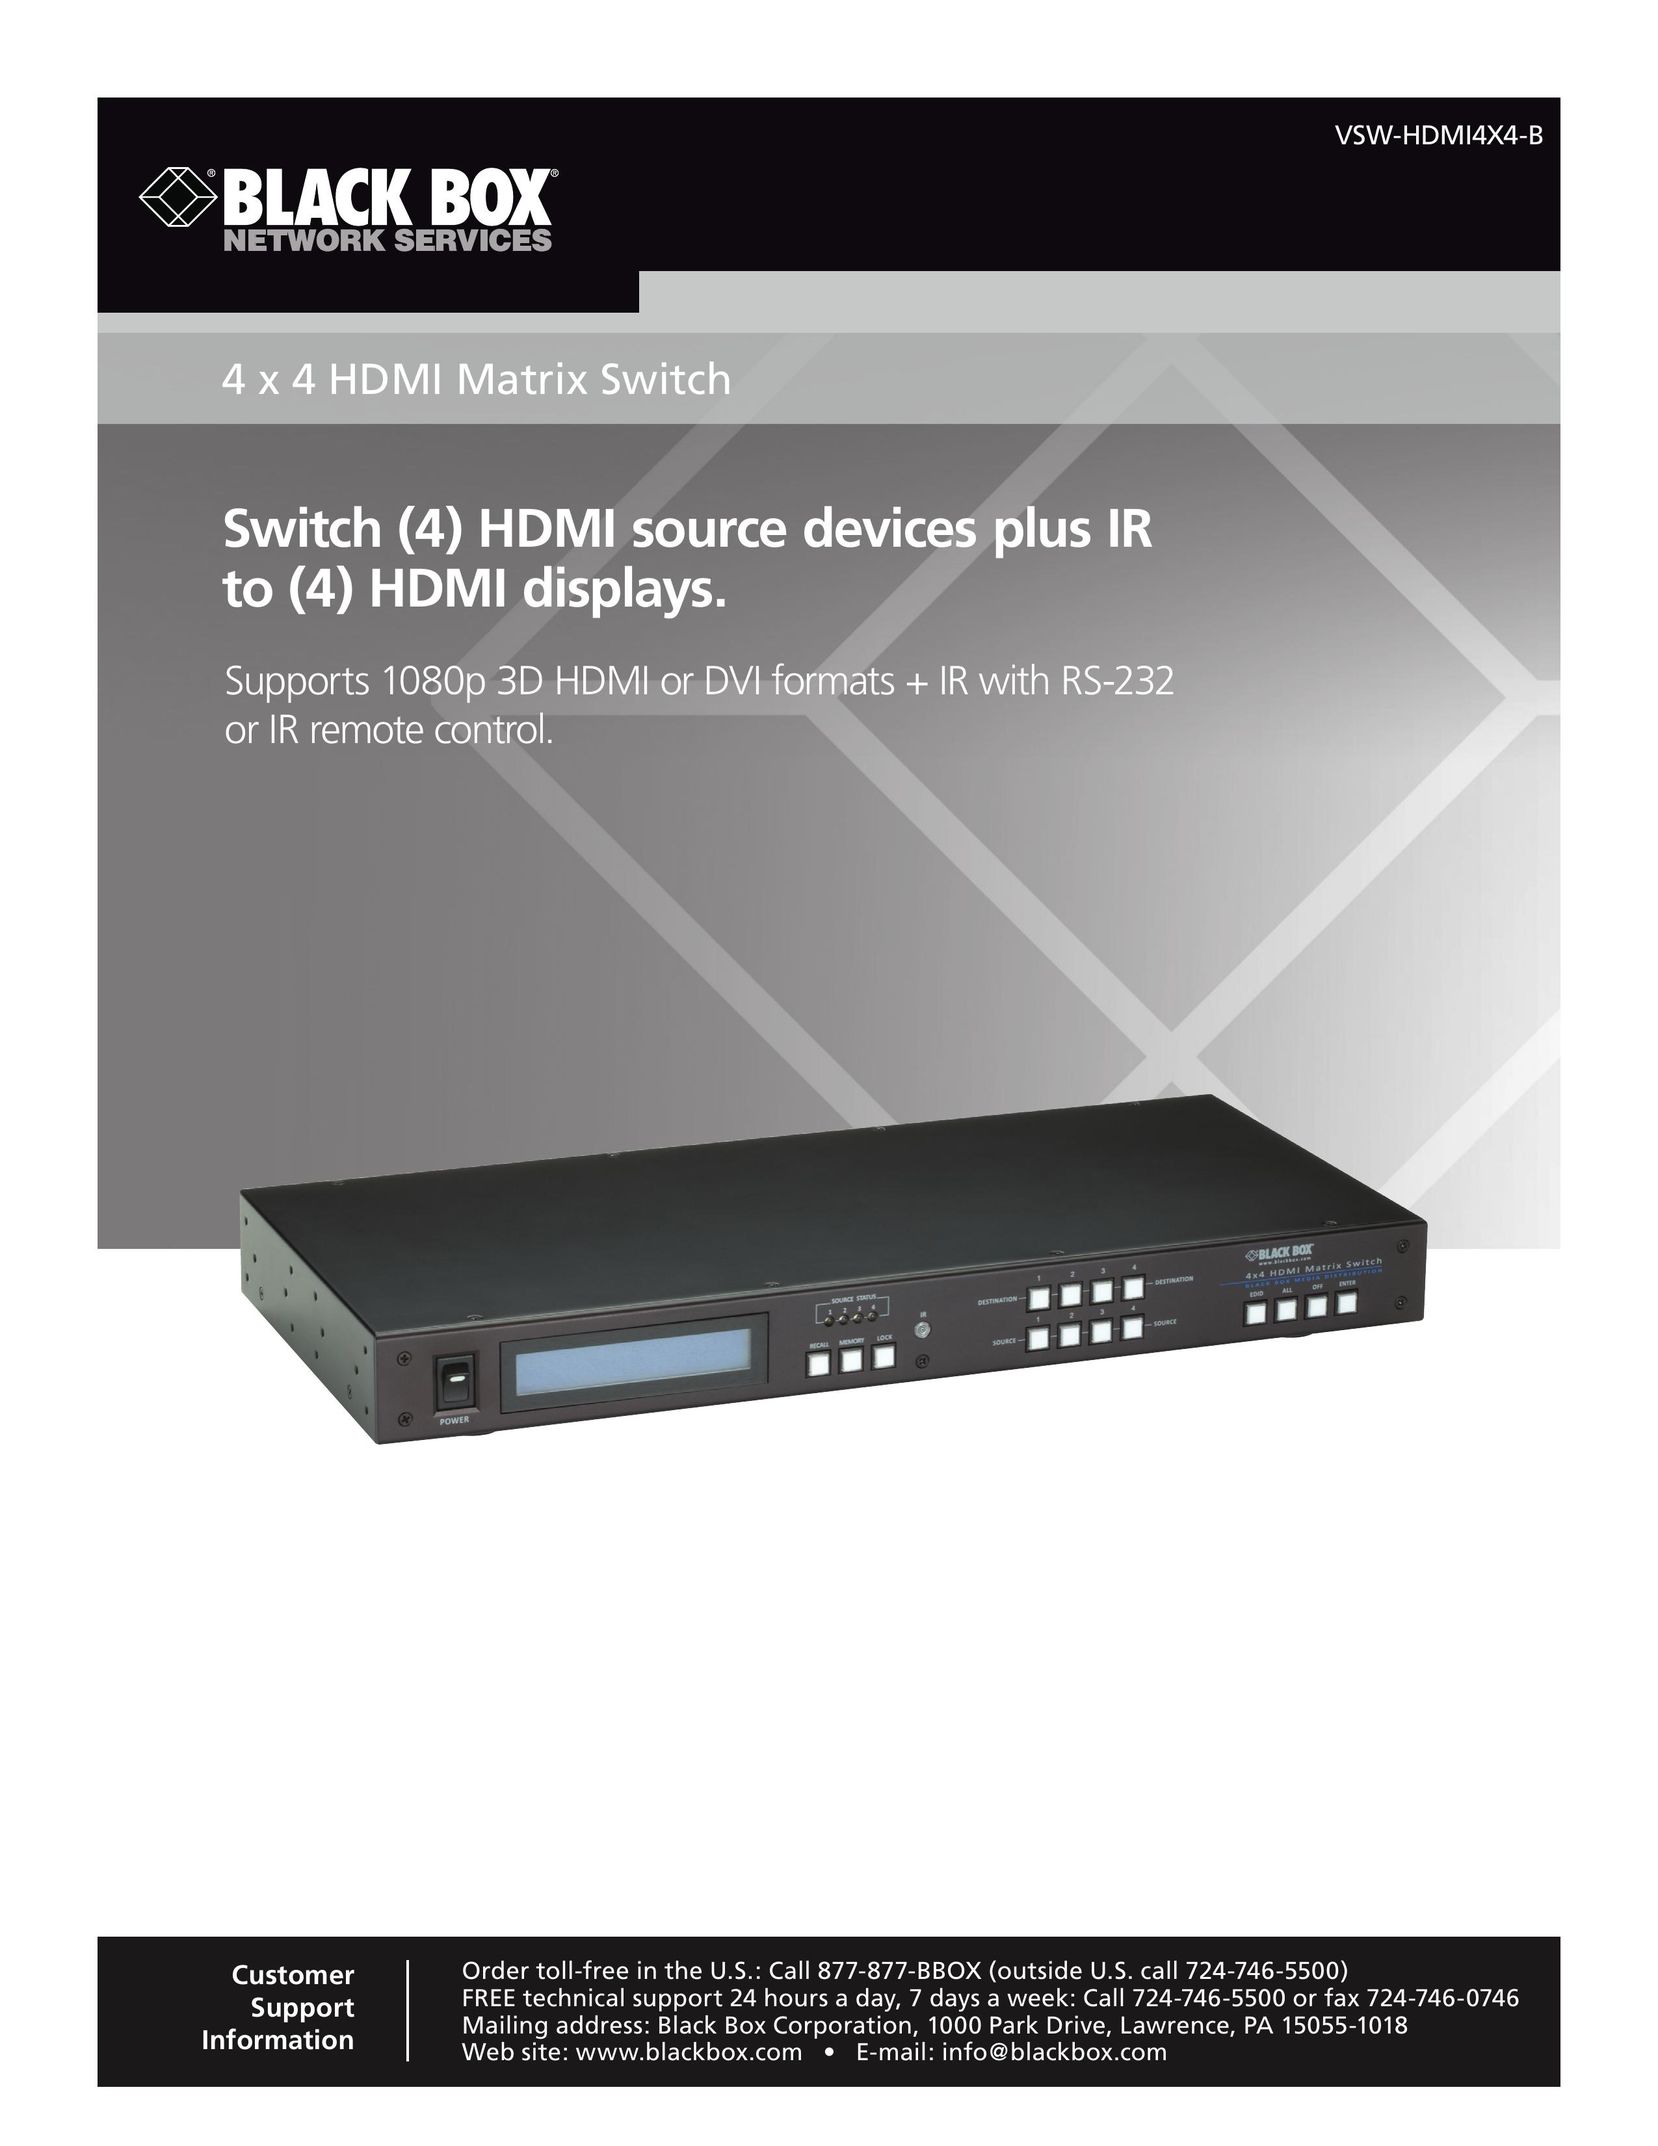 Black Box VSW-HDMI4X4-B TV Video Accessories User Manual